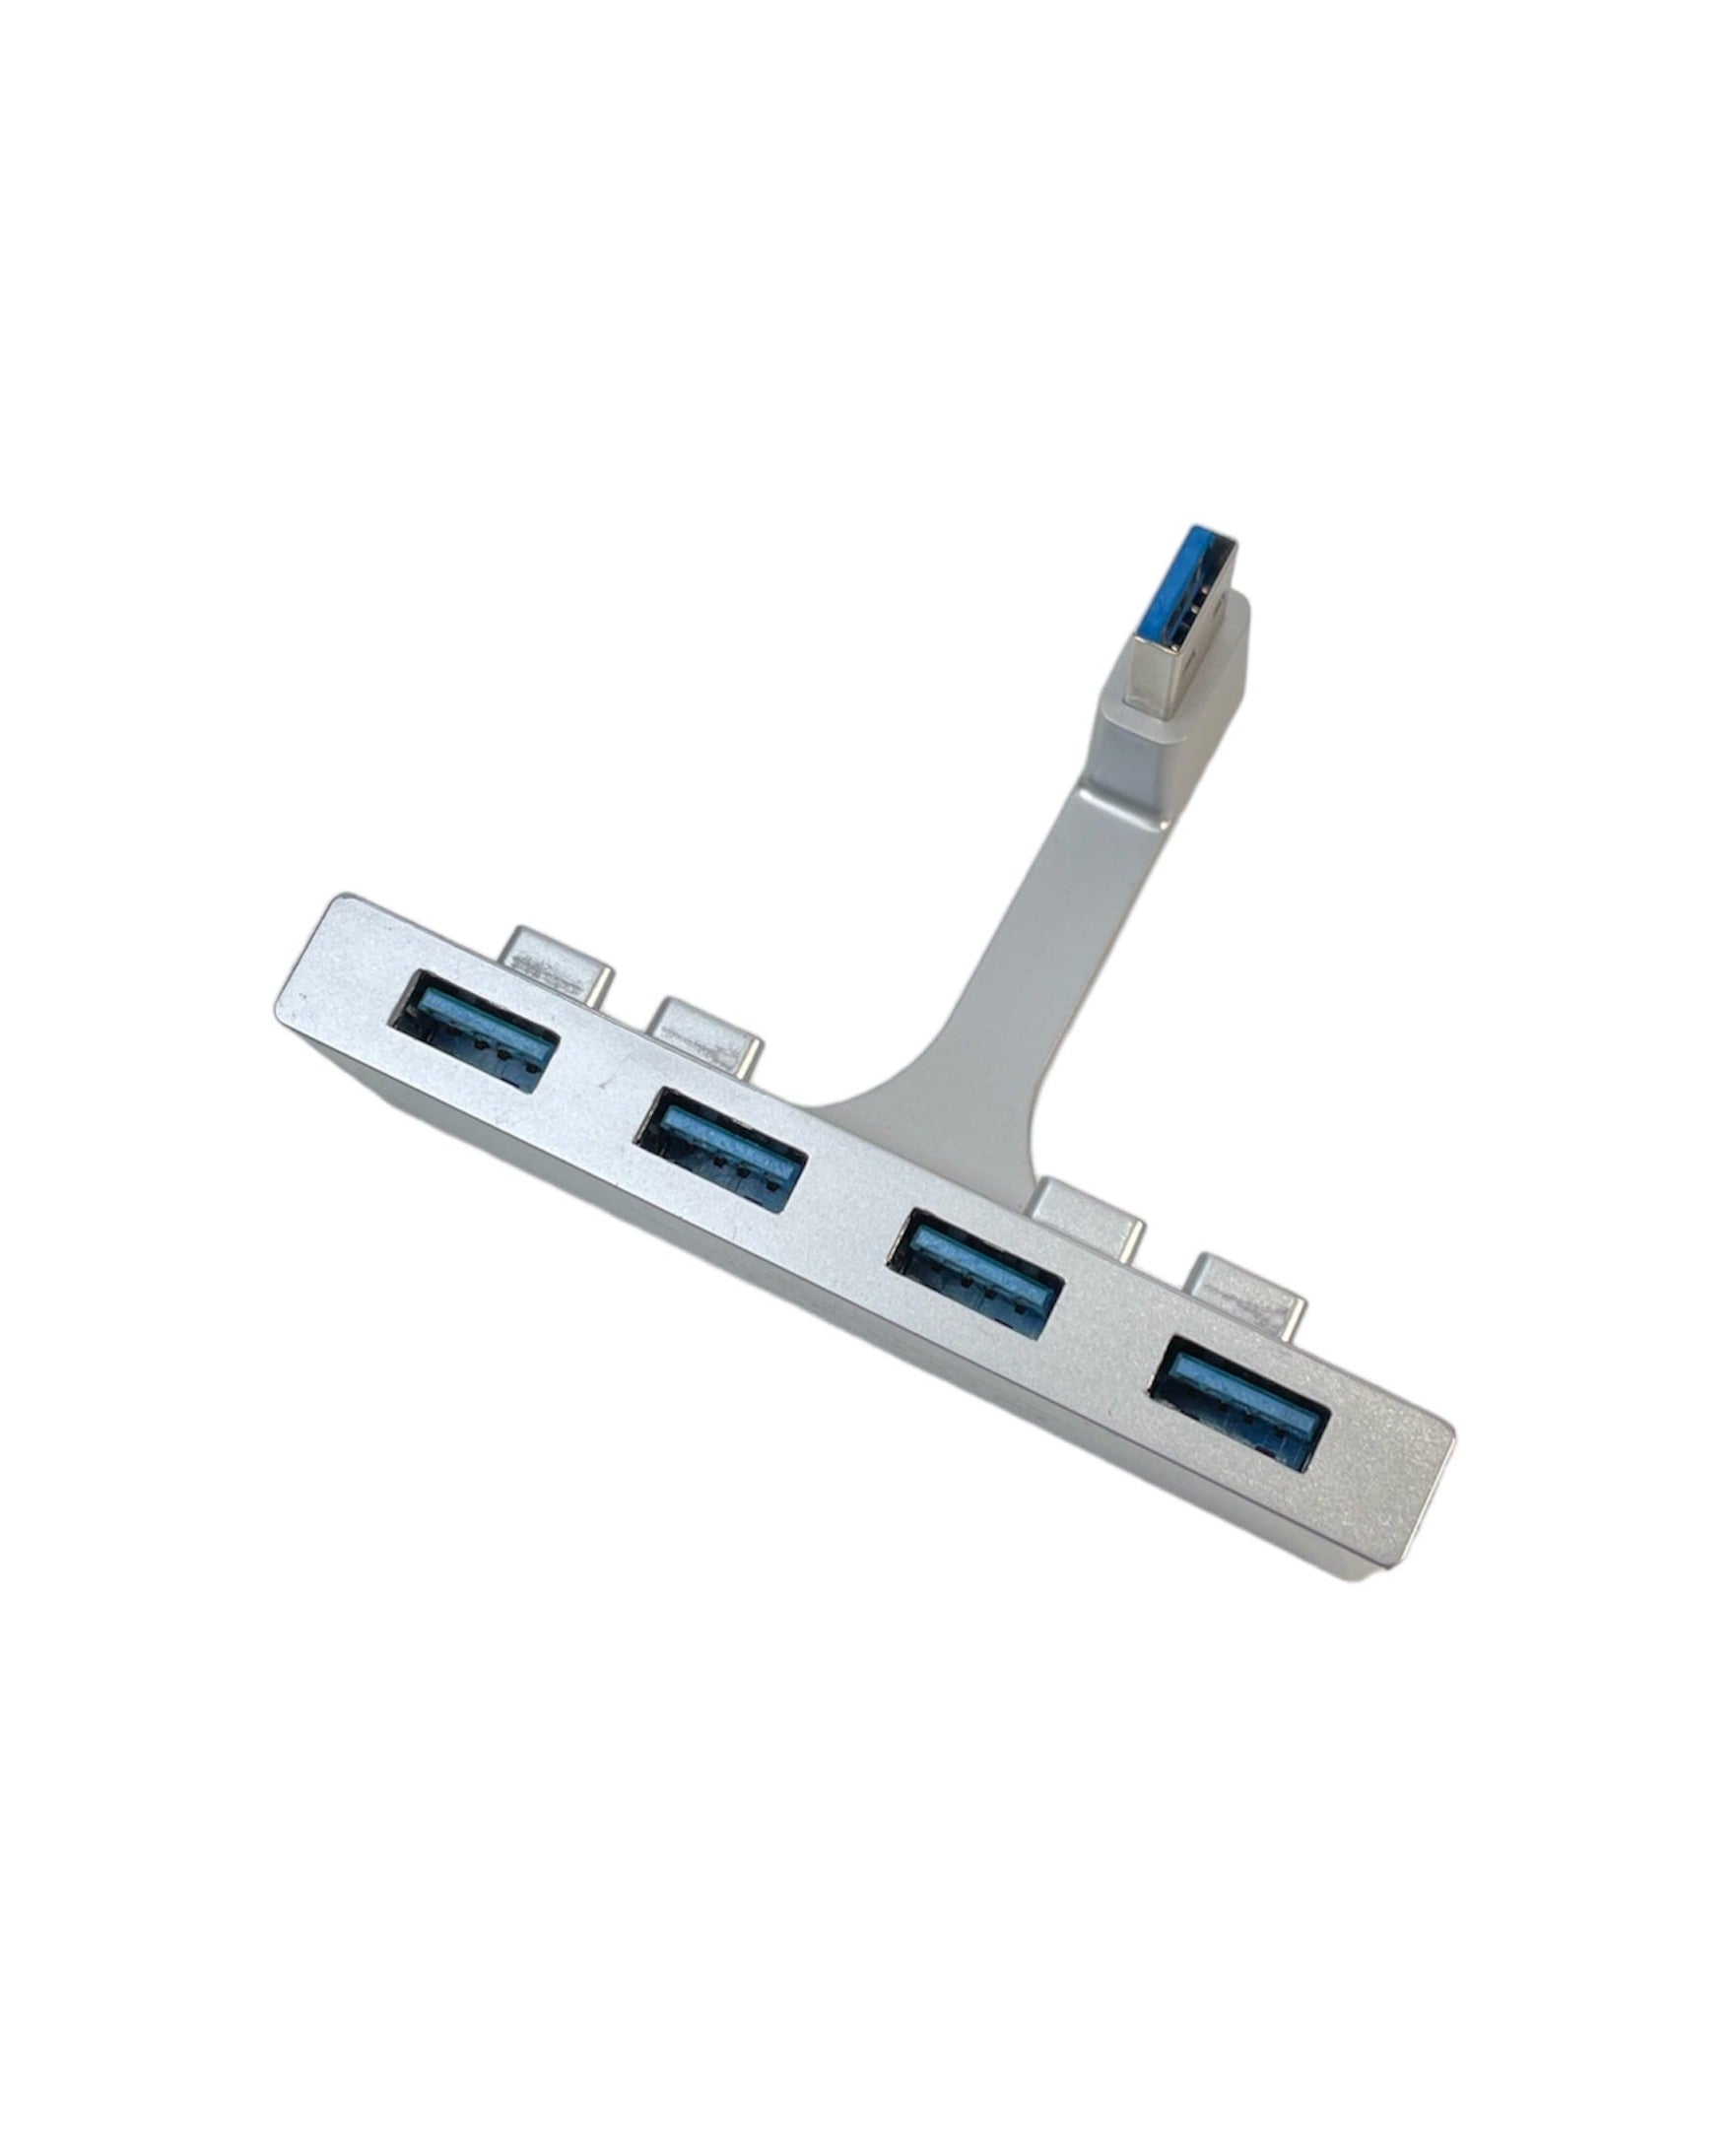 Sabrent Prenium 4-Port USB Hub